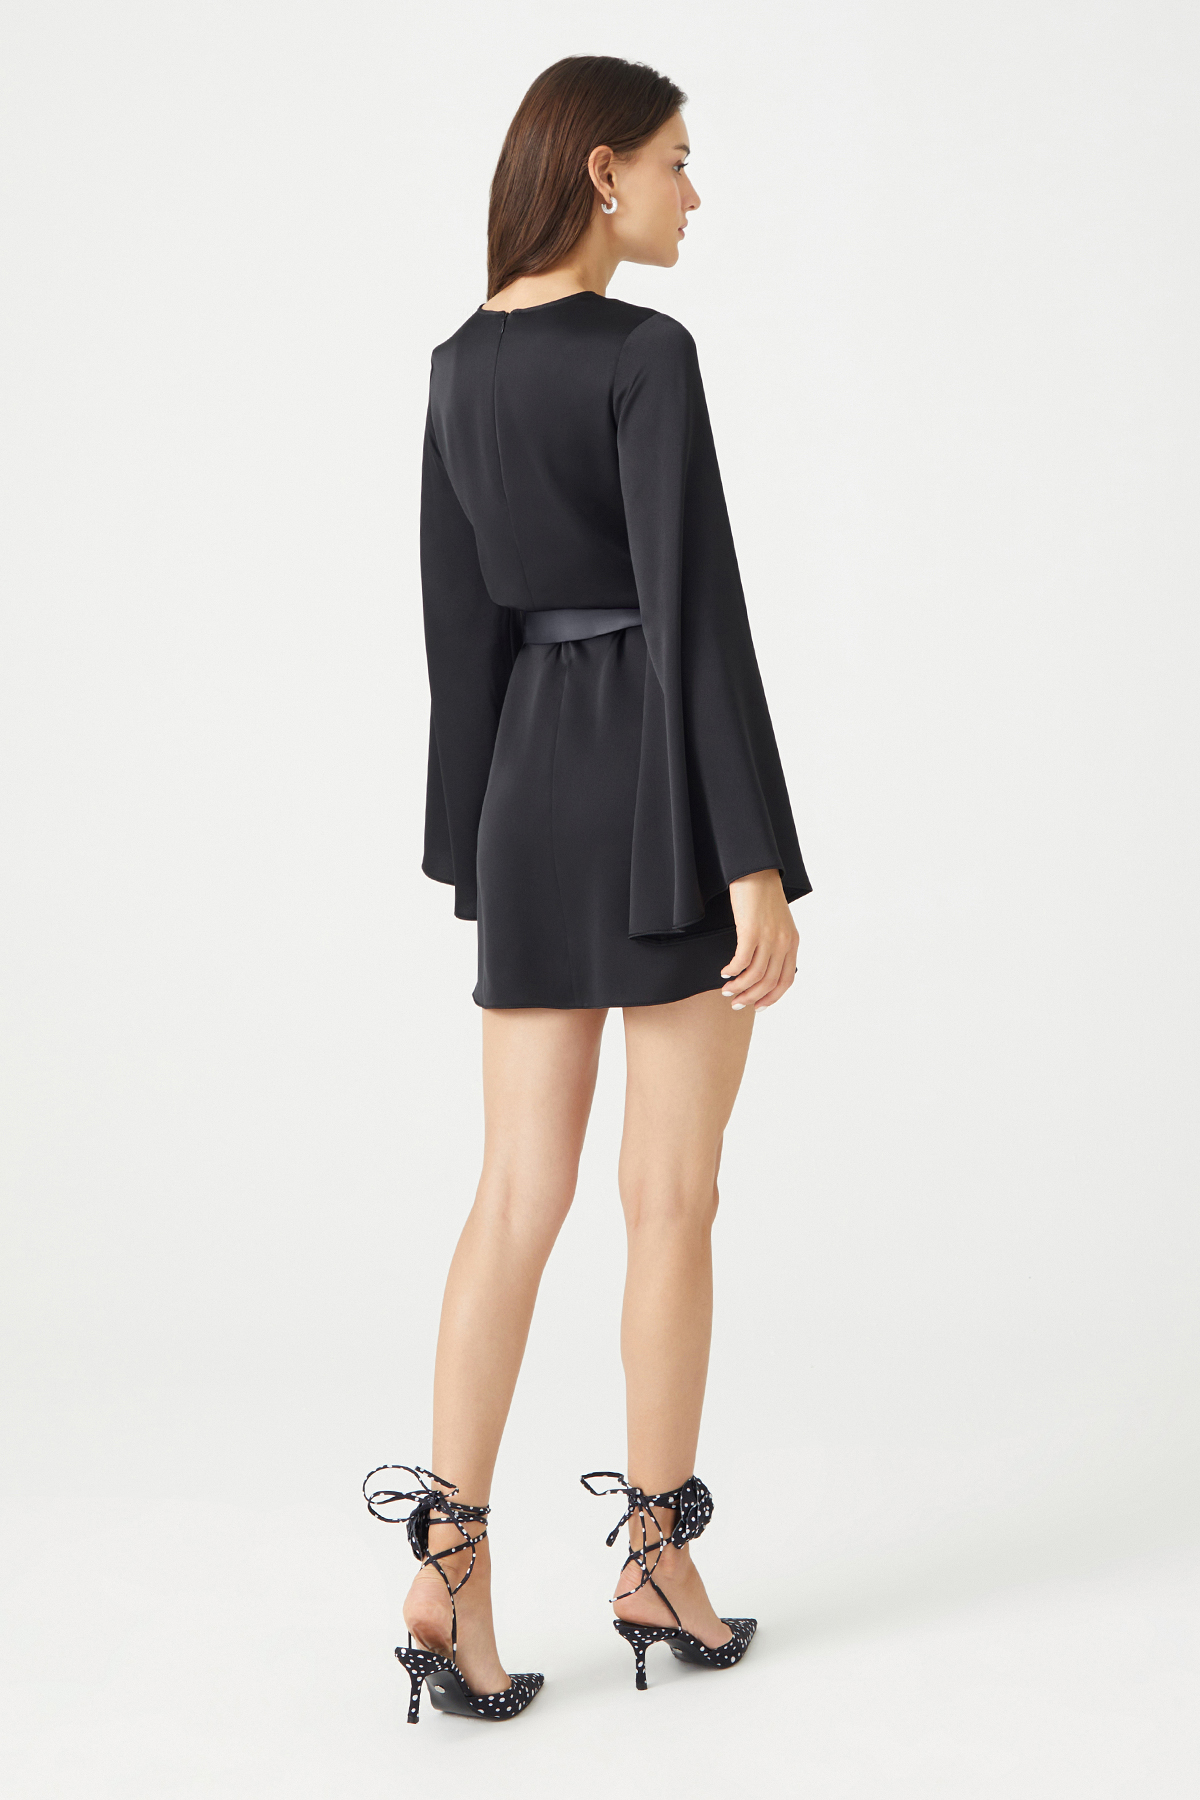 EMILY Bell Sleeve Mini Black Satin Dress